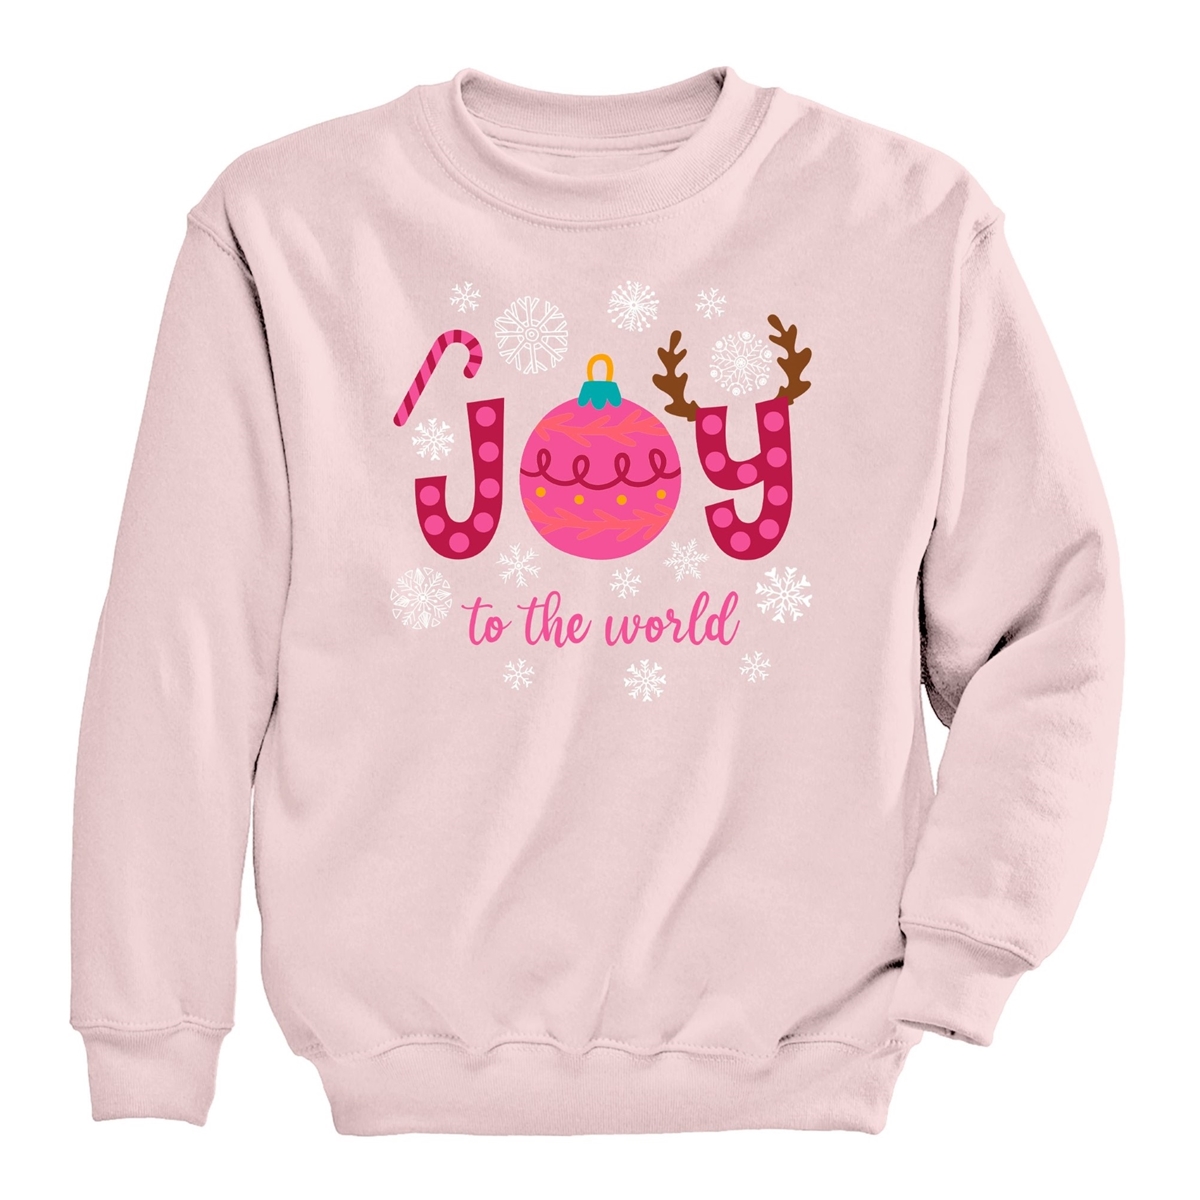 Joy to the World Sweatshirt